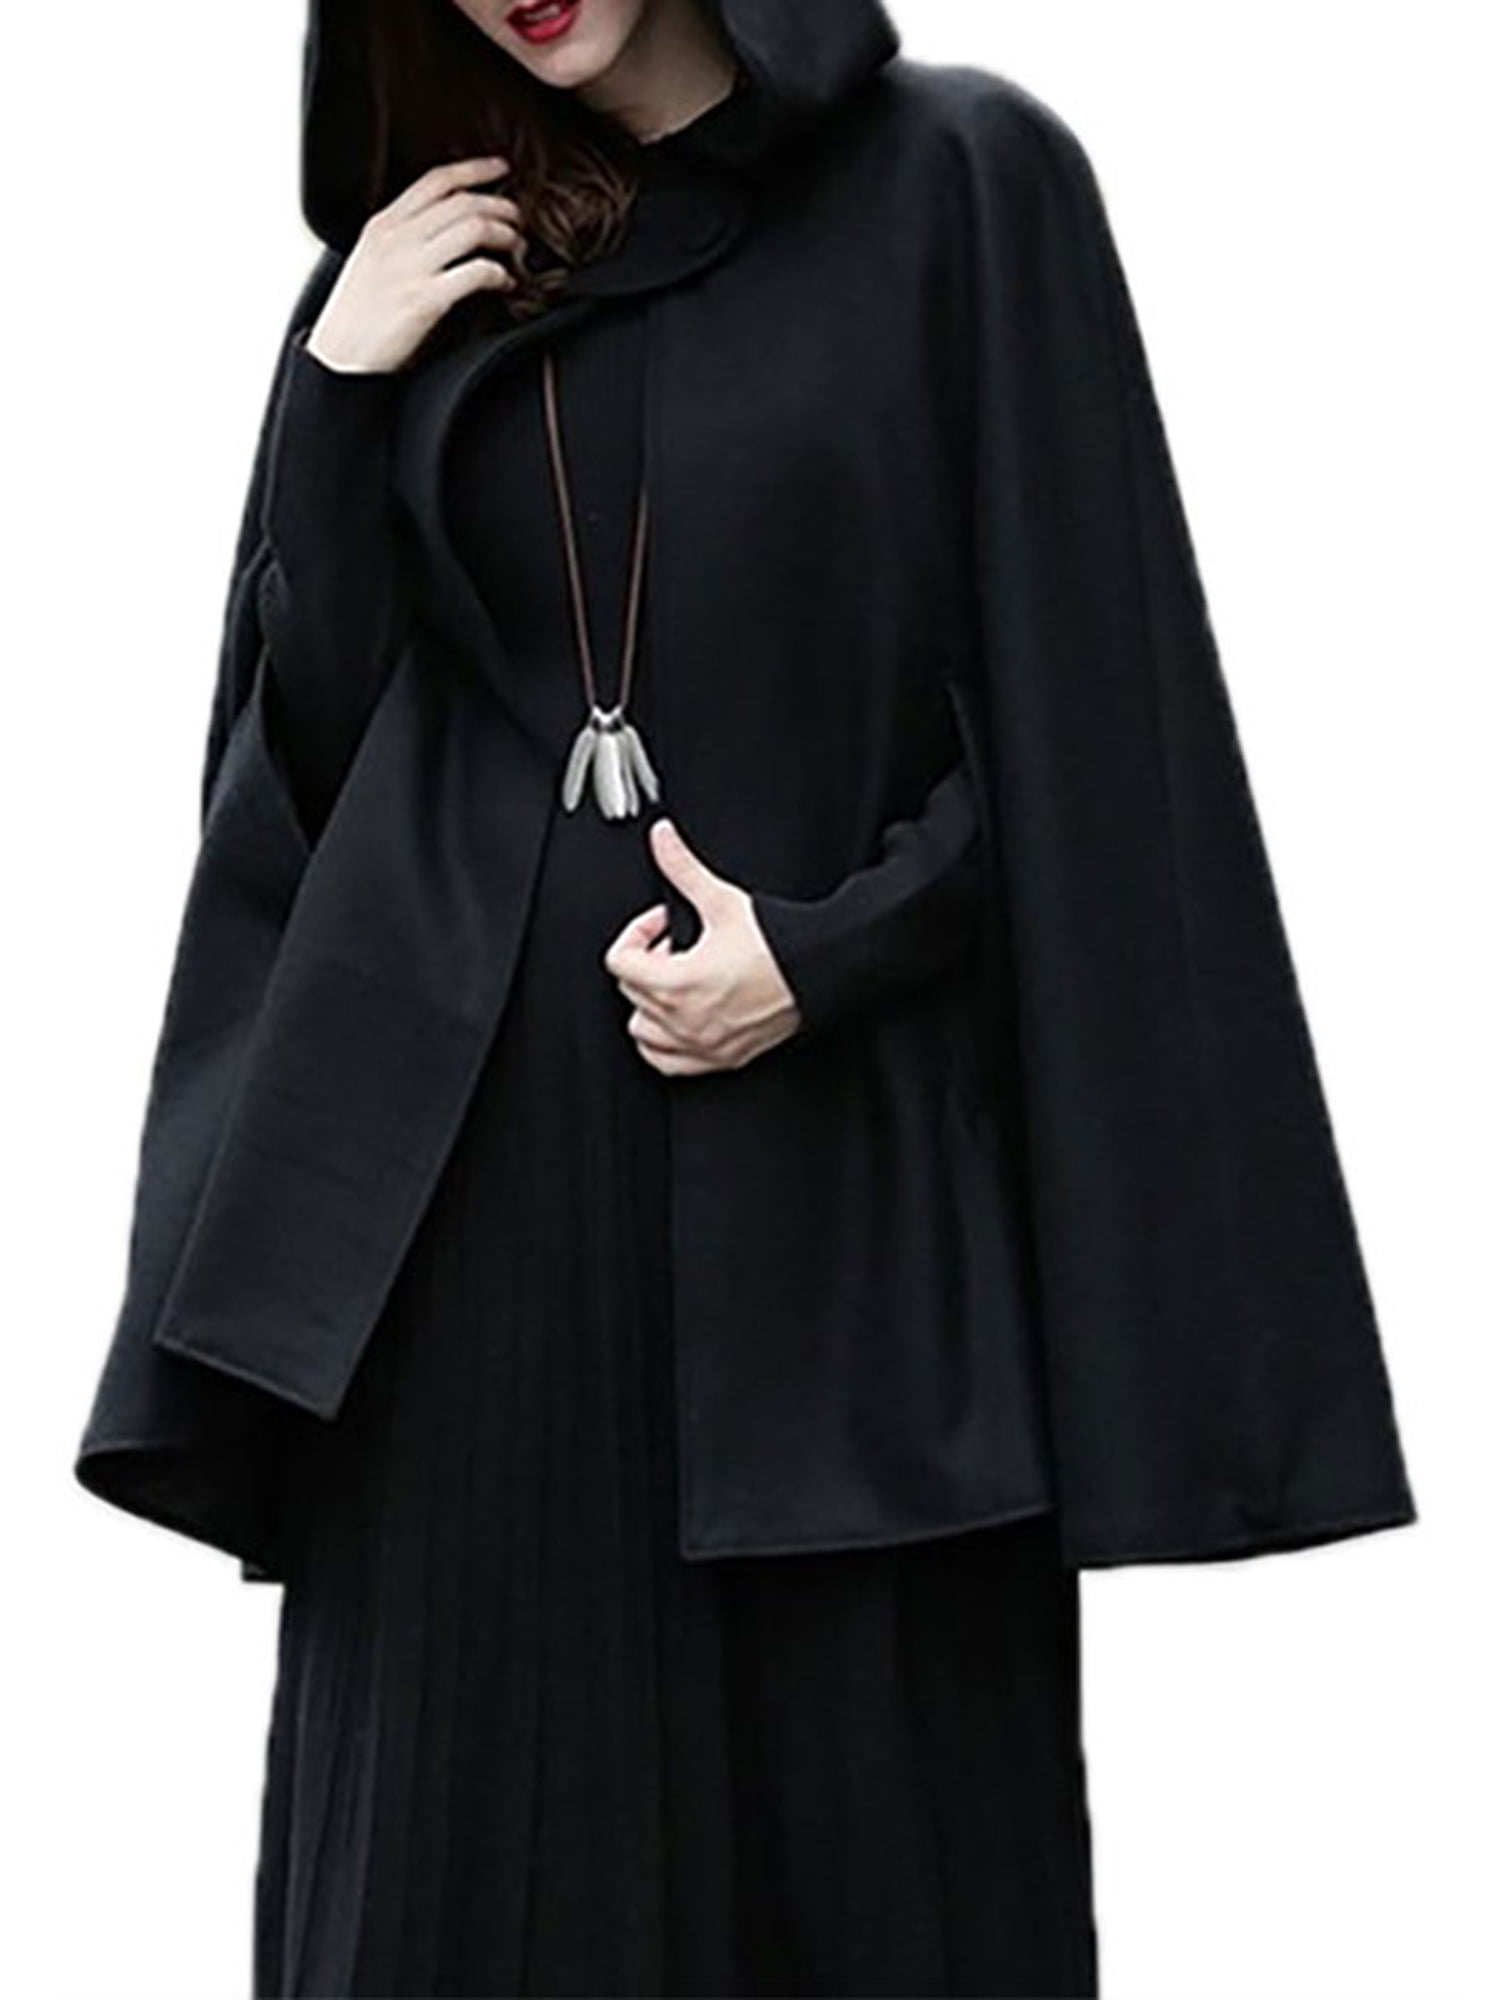 Women Cloak Hooded Batwing Sleeve Wool Coat Short Casual Cape Poncho